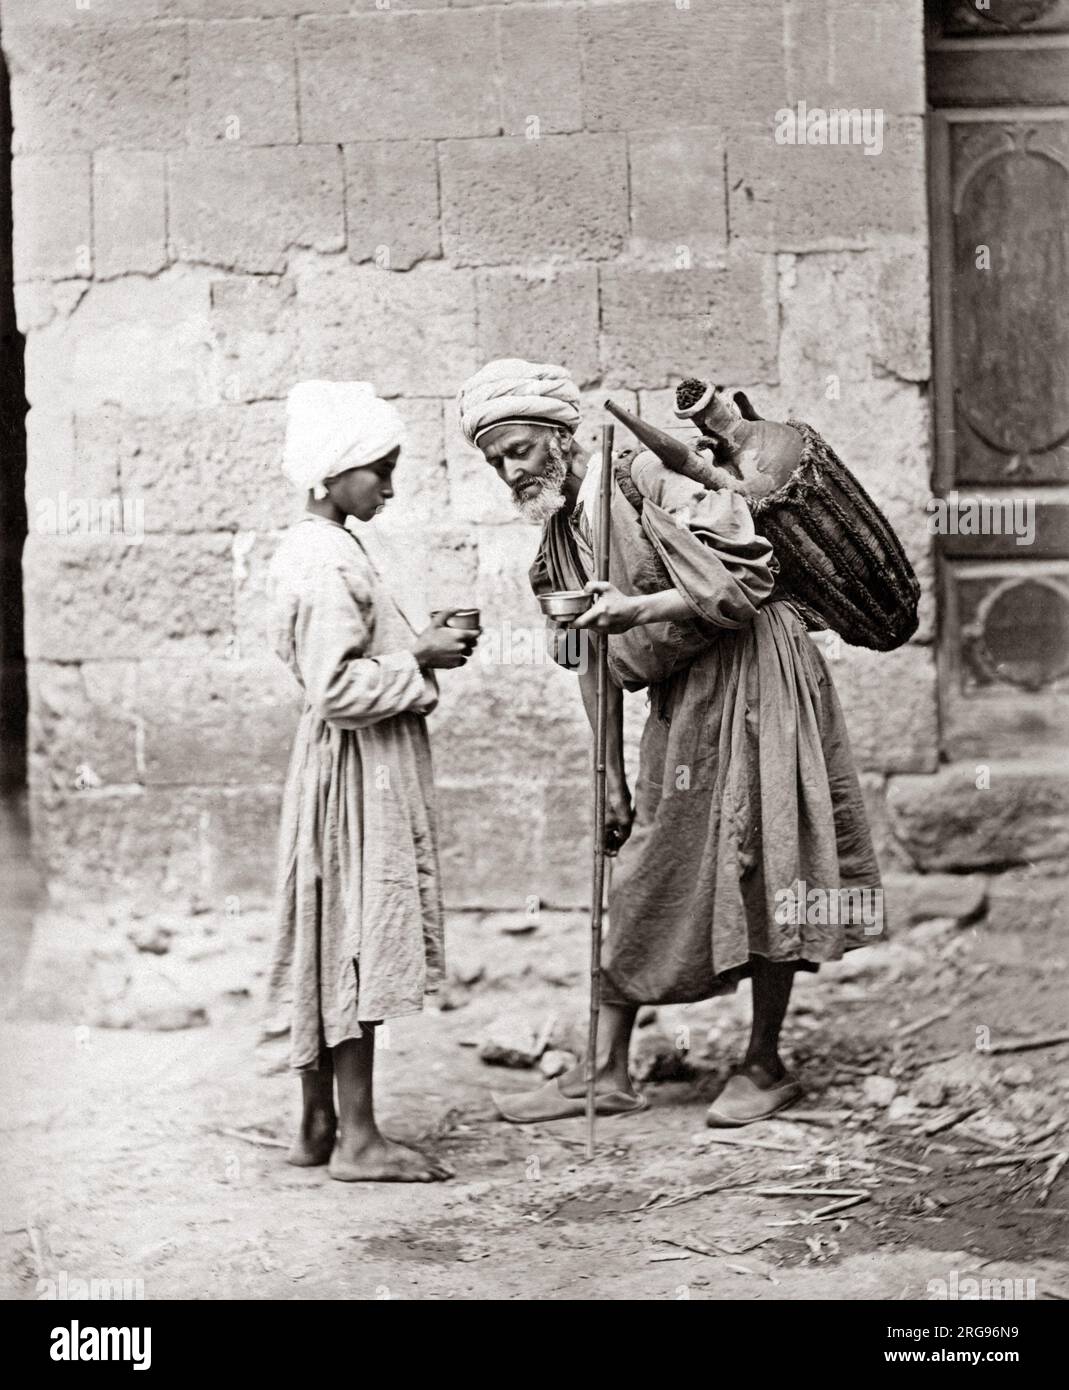 Bettler sucht Almosen, Ägypten, um 1880er. Stockfoto